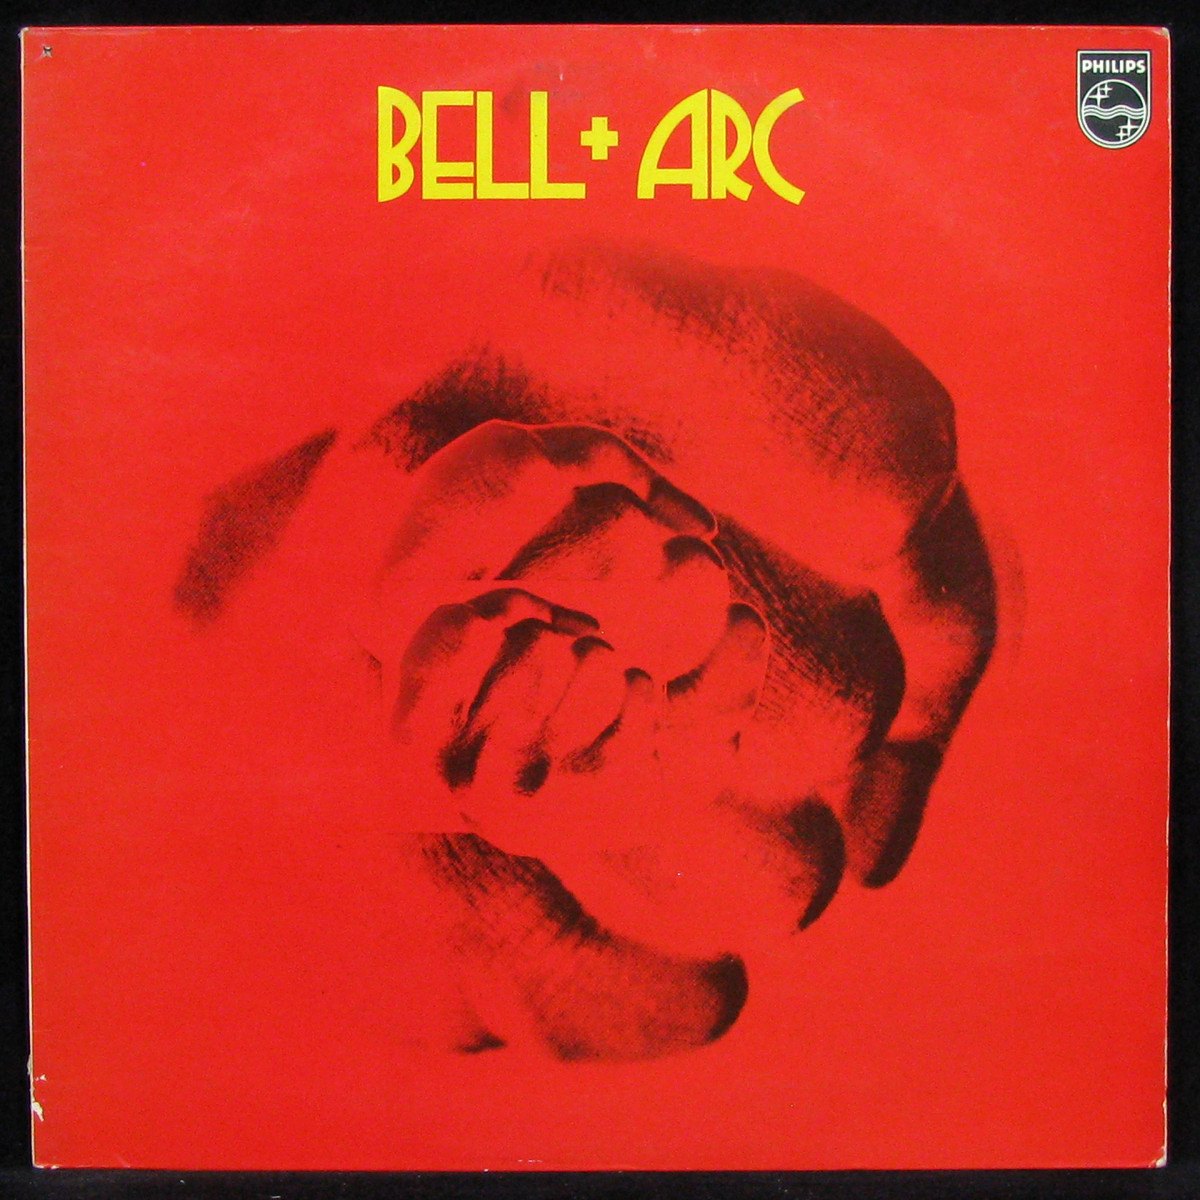 LP Bell + Arc — Bell + Arc фото